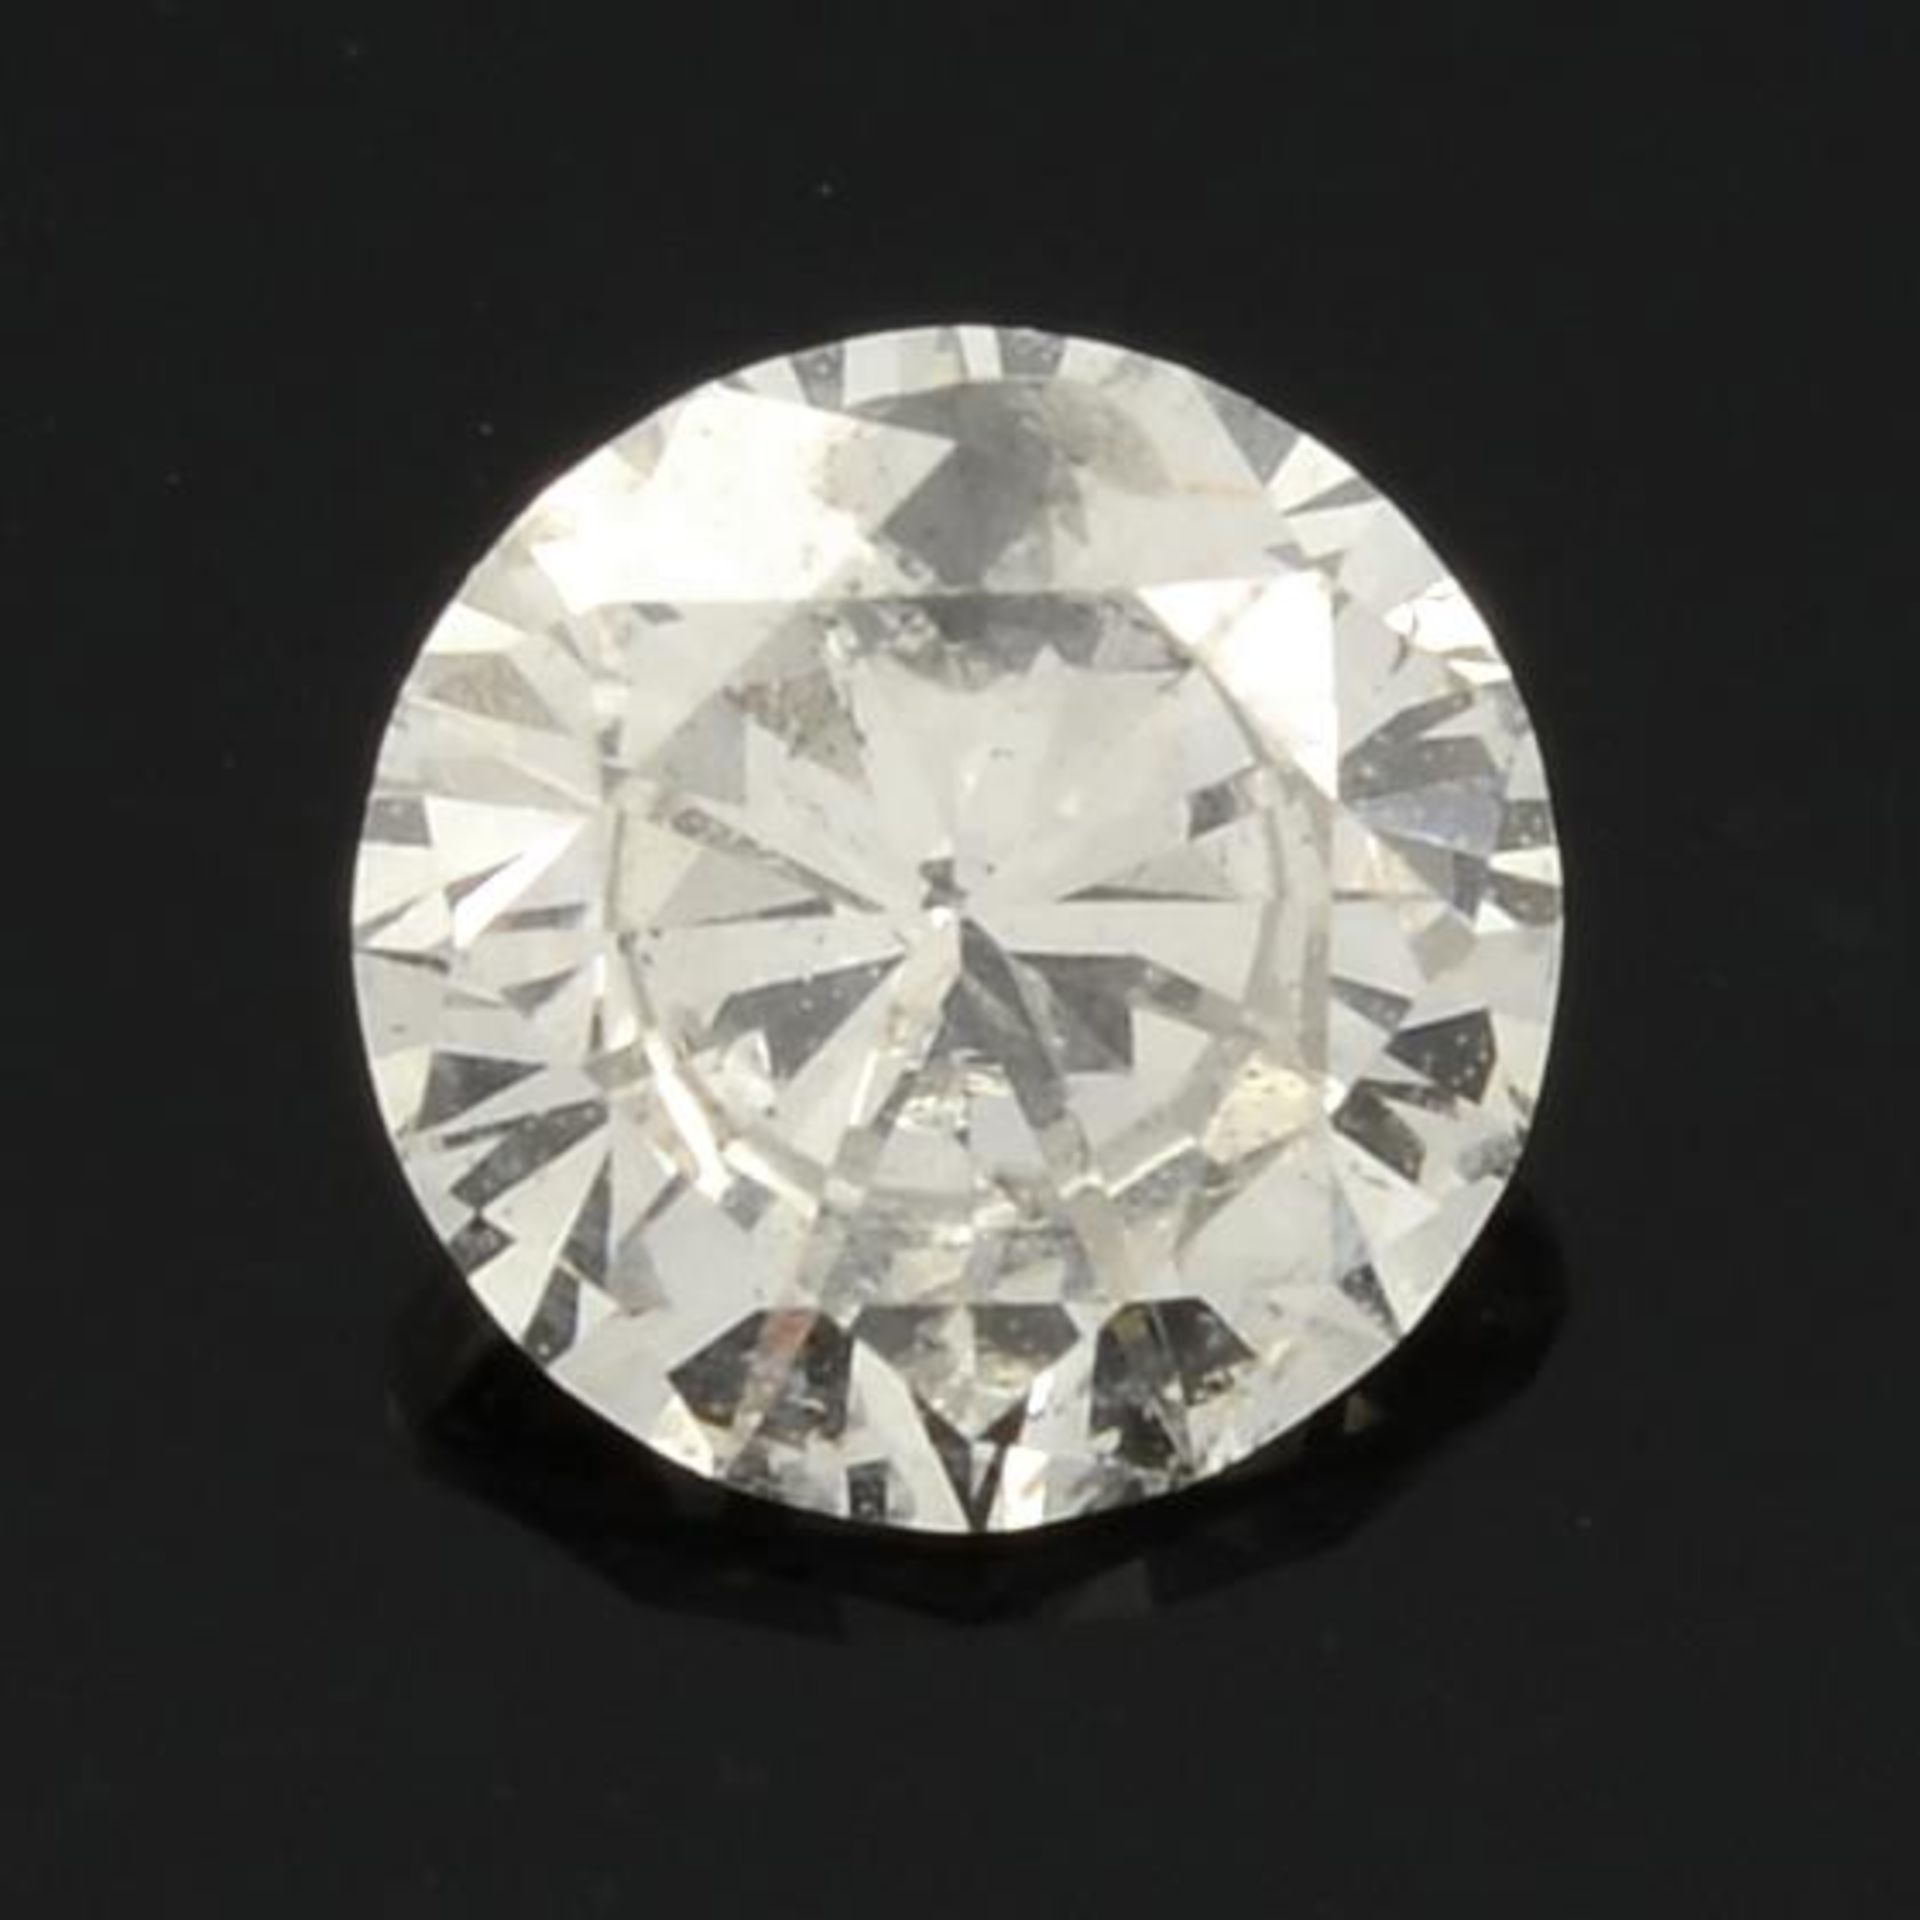 A brilliant cut diamond.